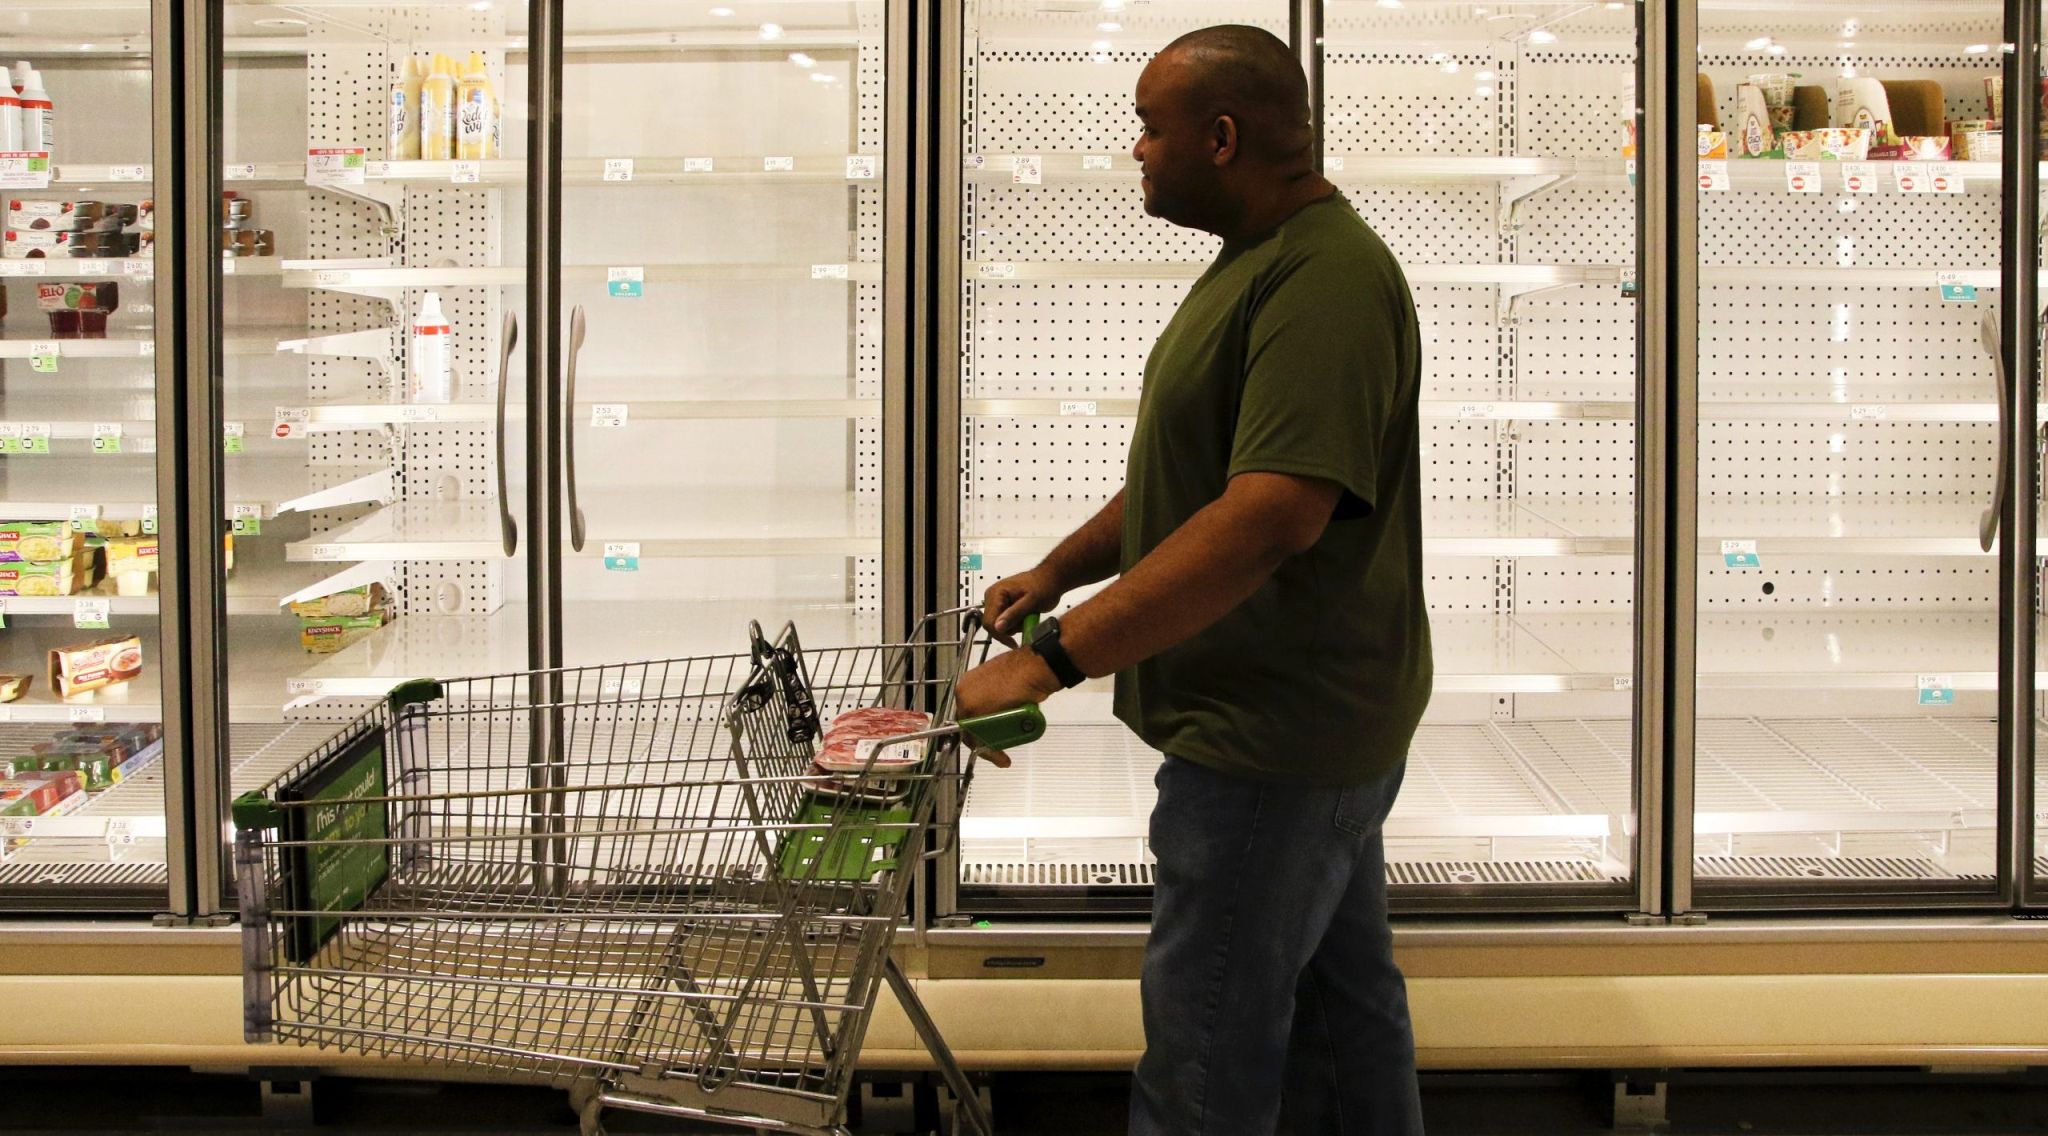 Supermarket shopper pushing cart past empty refrigerator cases